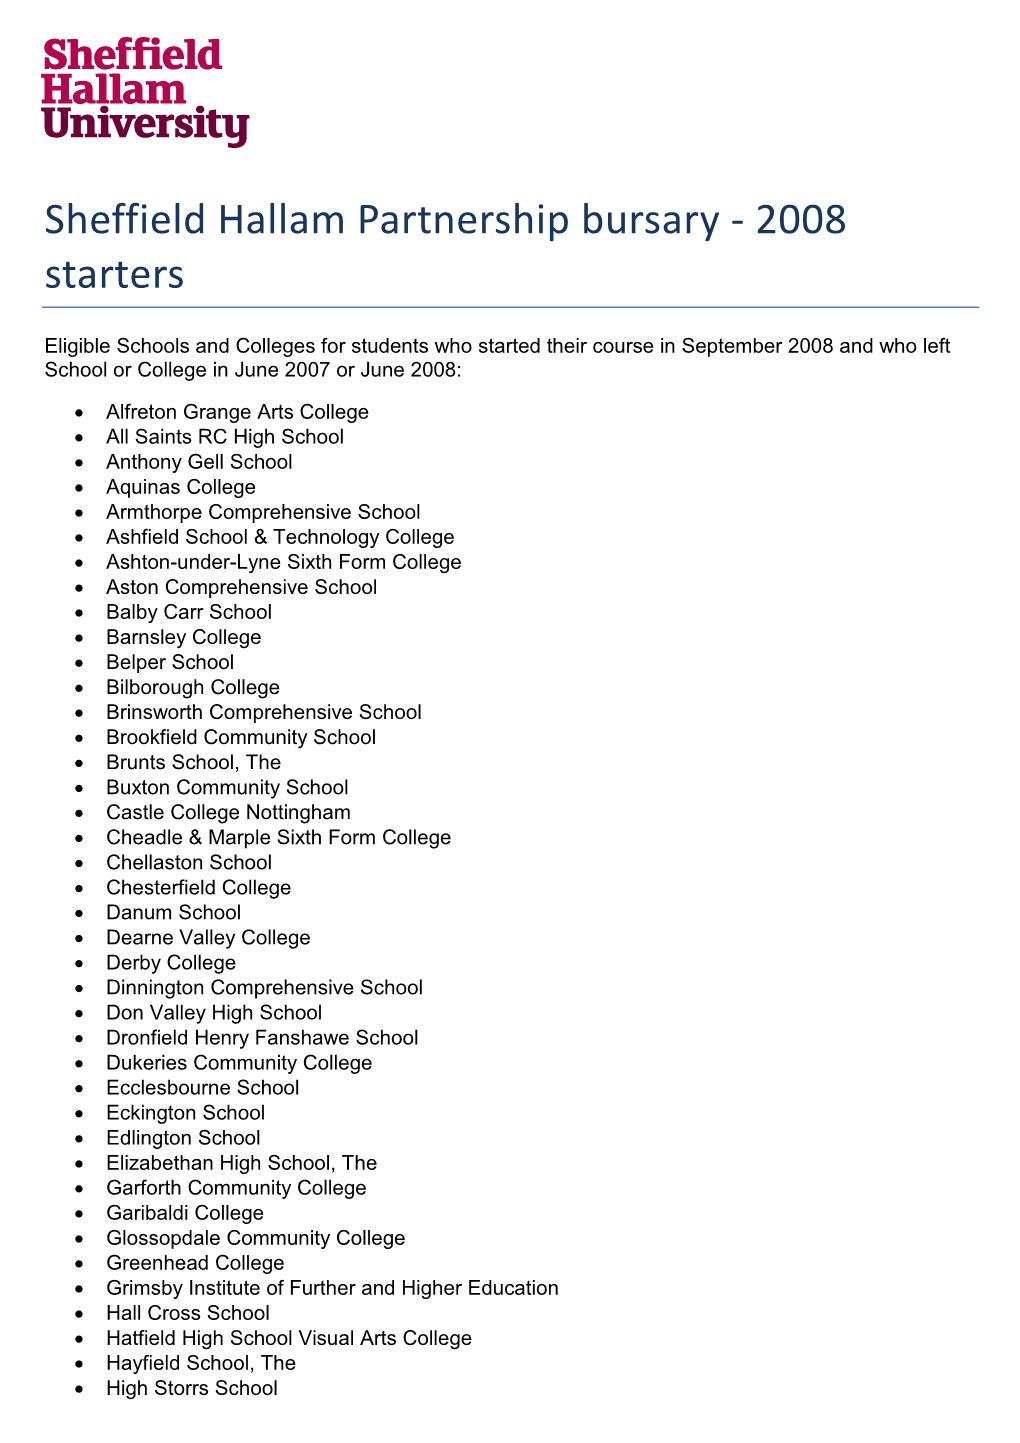 Sheffield Hallam Partnership Bursary - 2008 Starters